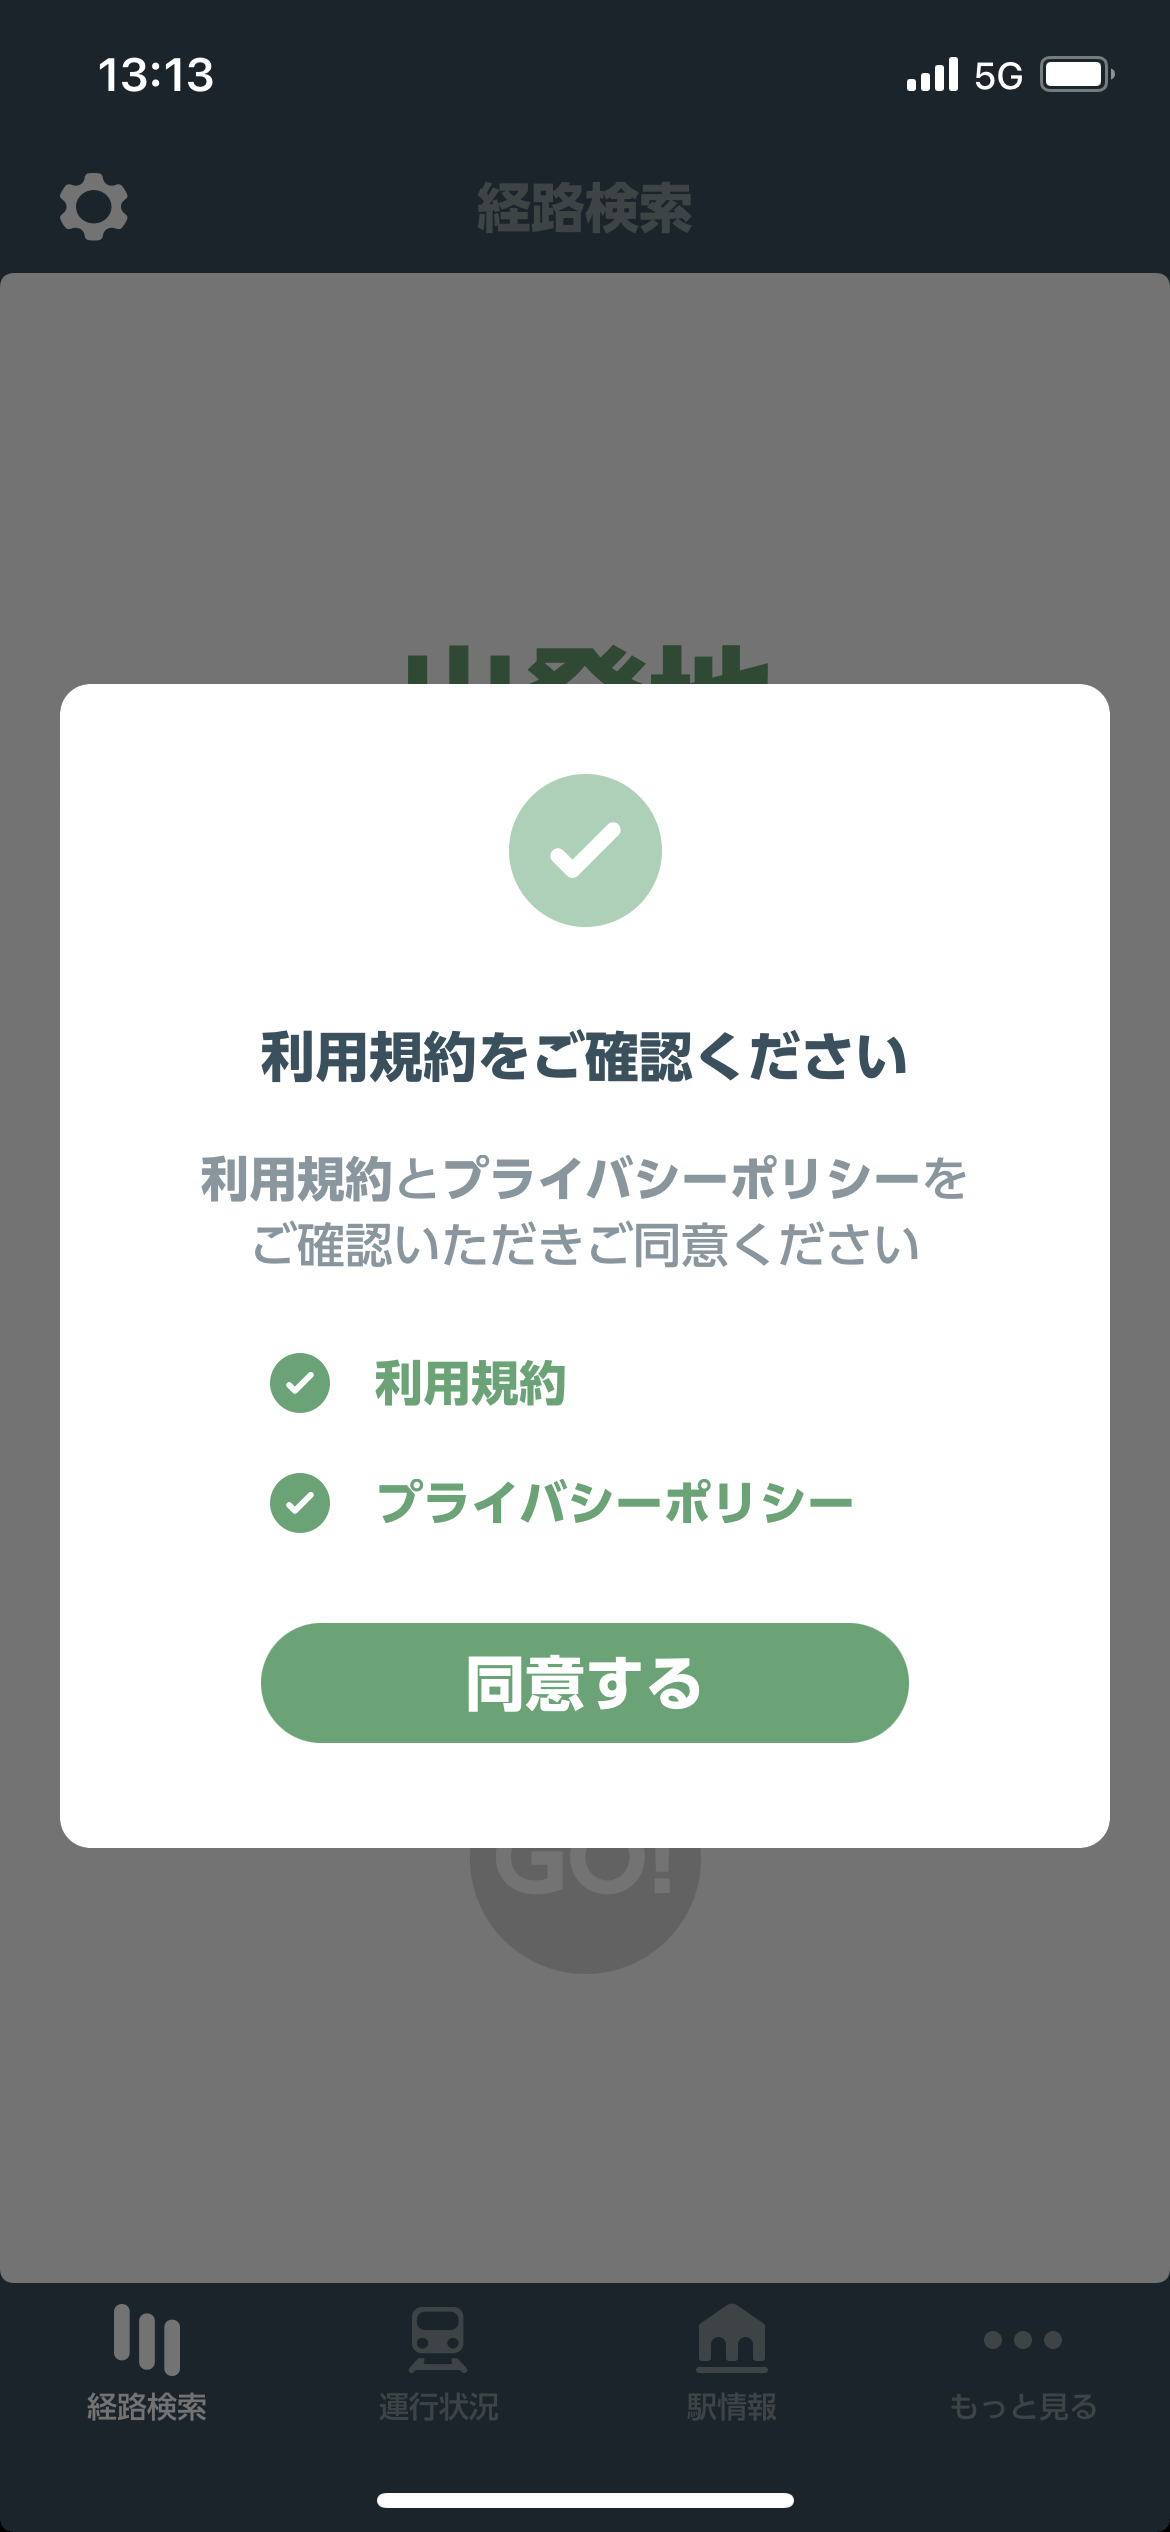 JR東日本アプリ オンボーディング screen